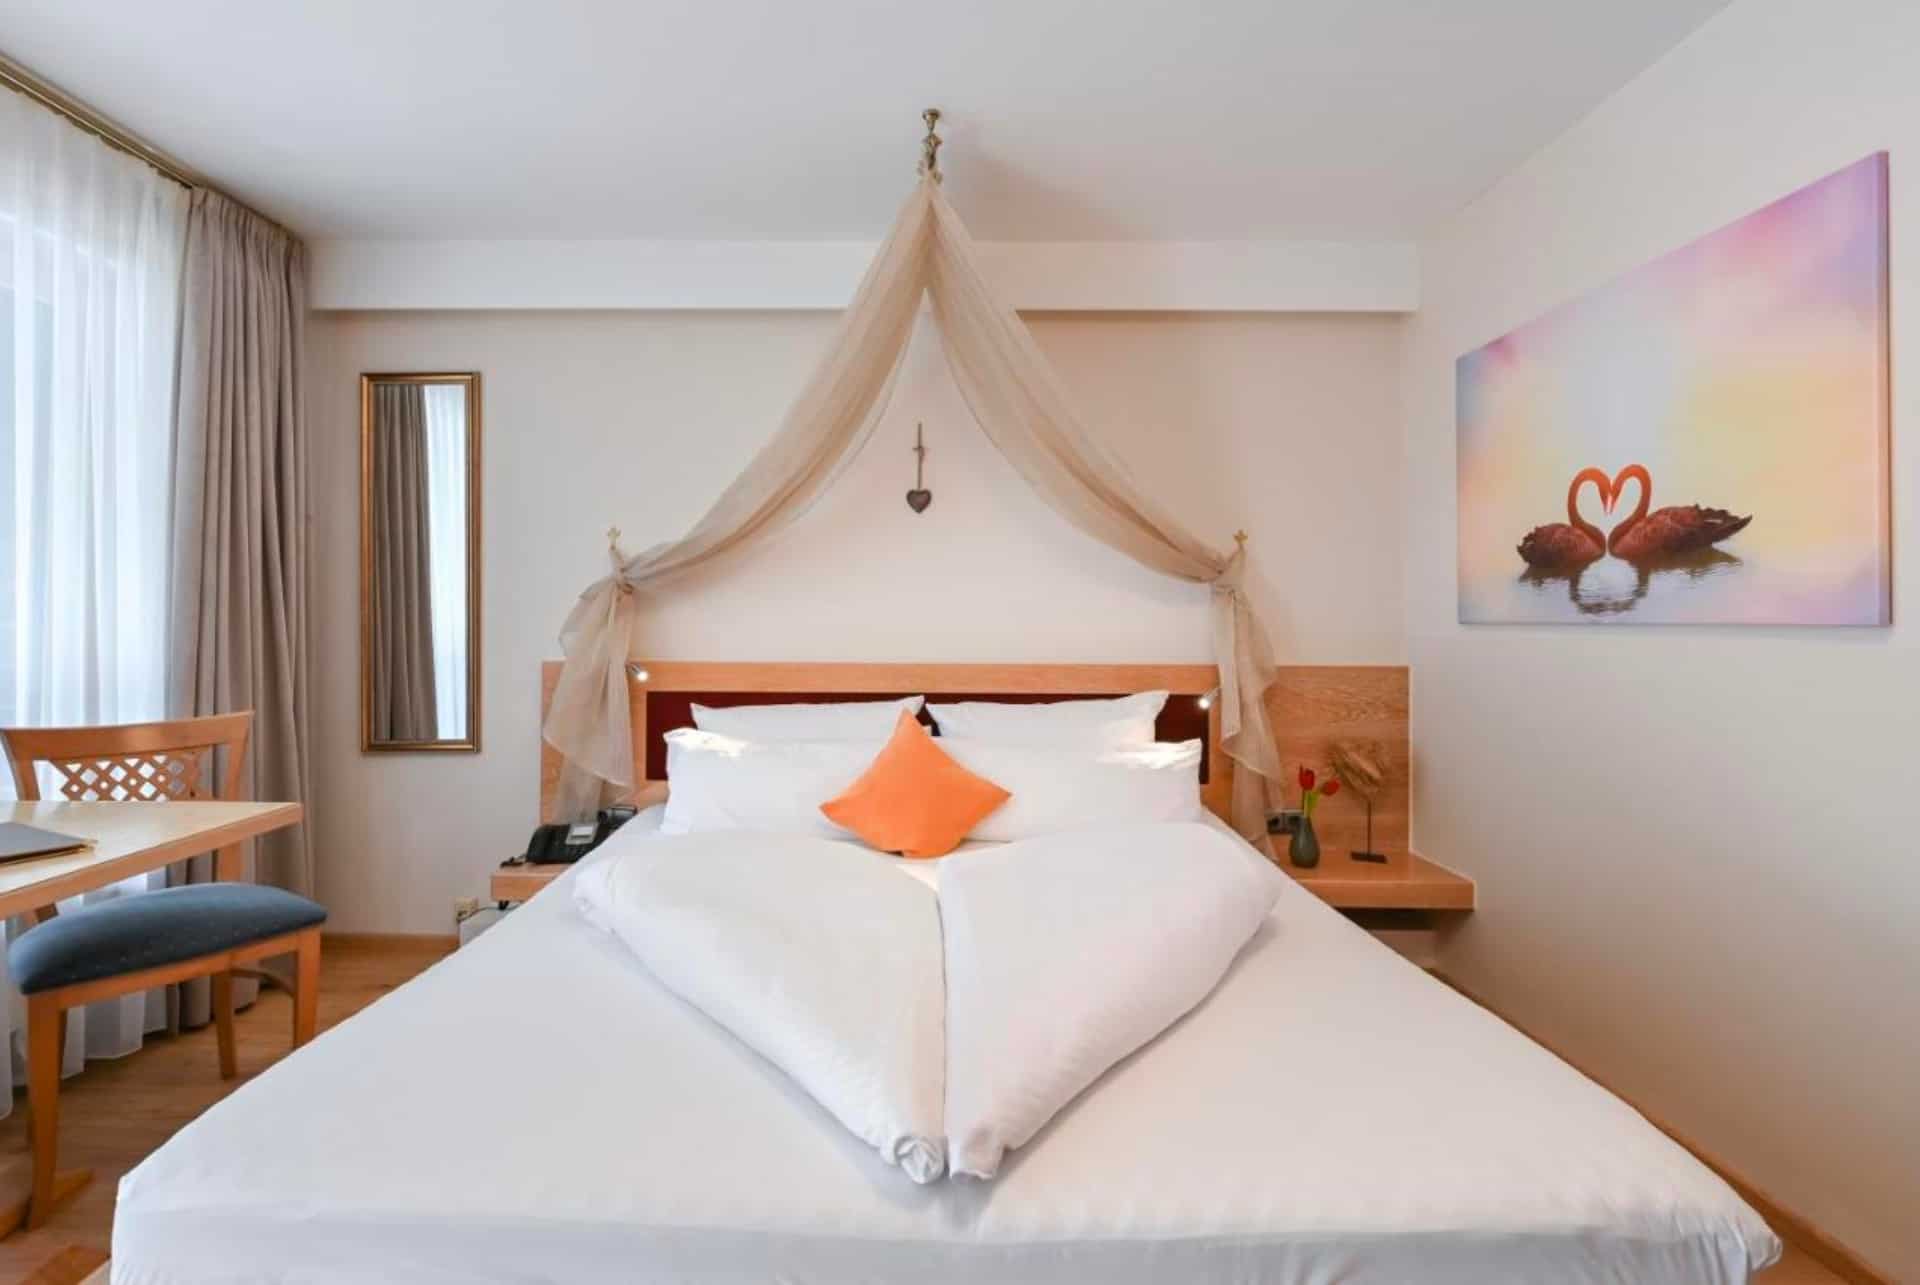 Hotel Alpenstuben chambre Ou dormir pres du chateau de Neuschwanstein